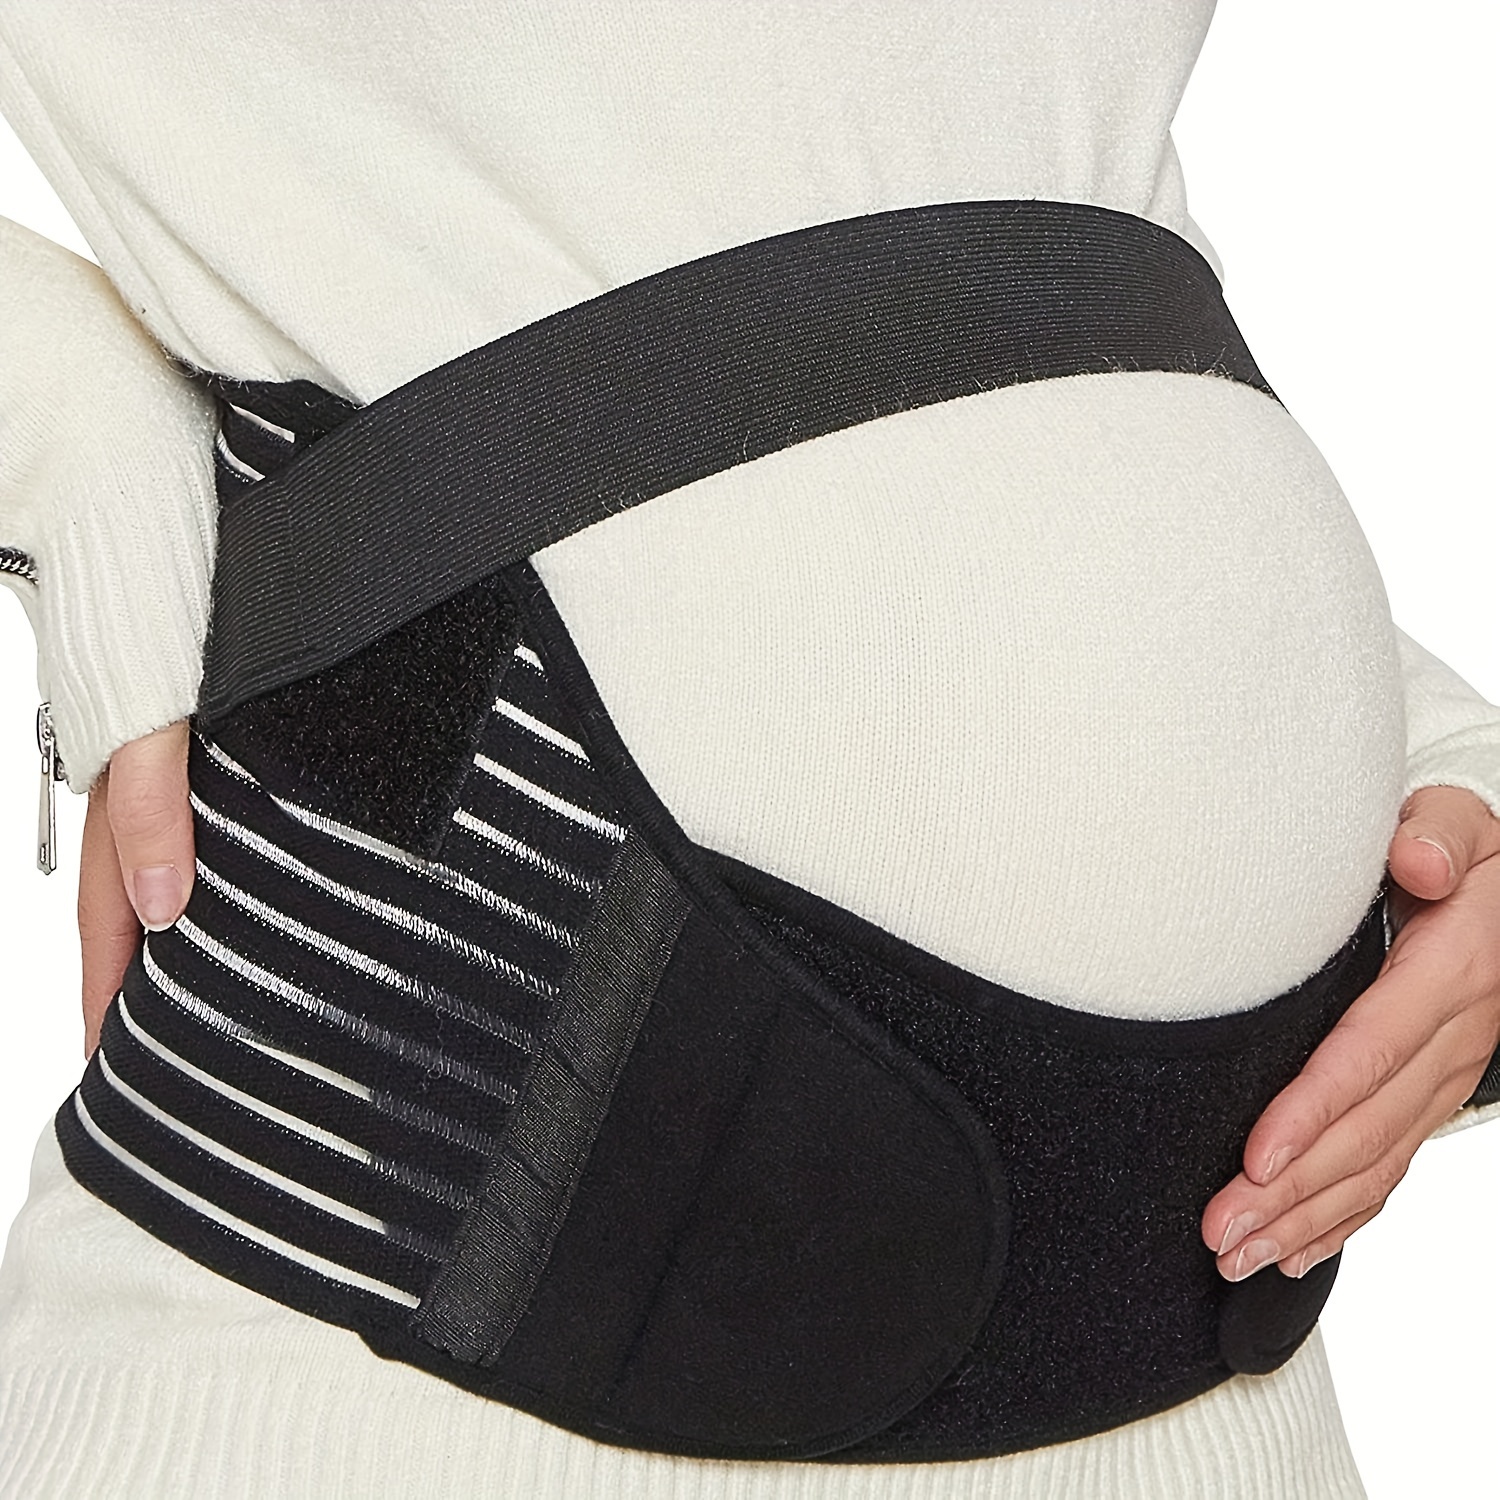 Women Pregnancy Support Belt Maternity Belly Belt Waist Care Pant Extender  Protector Abdomen Band Back Brace Maternity Clothing